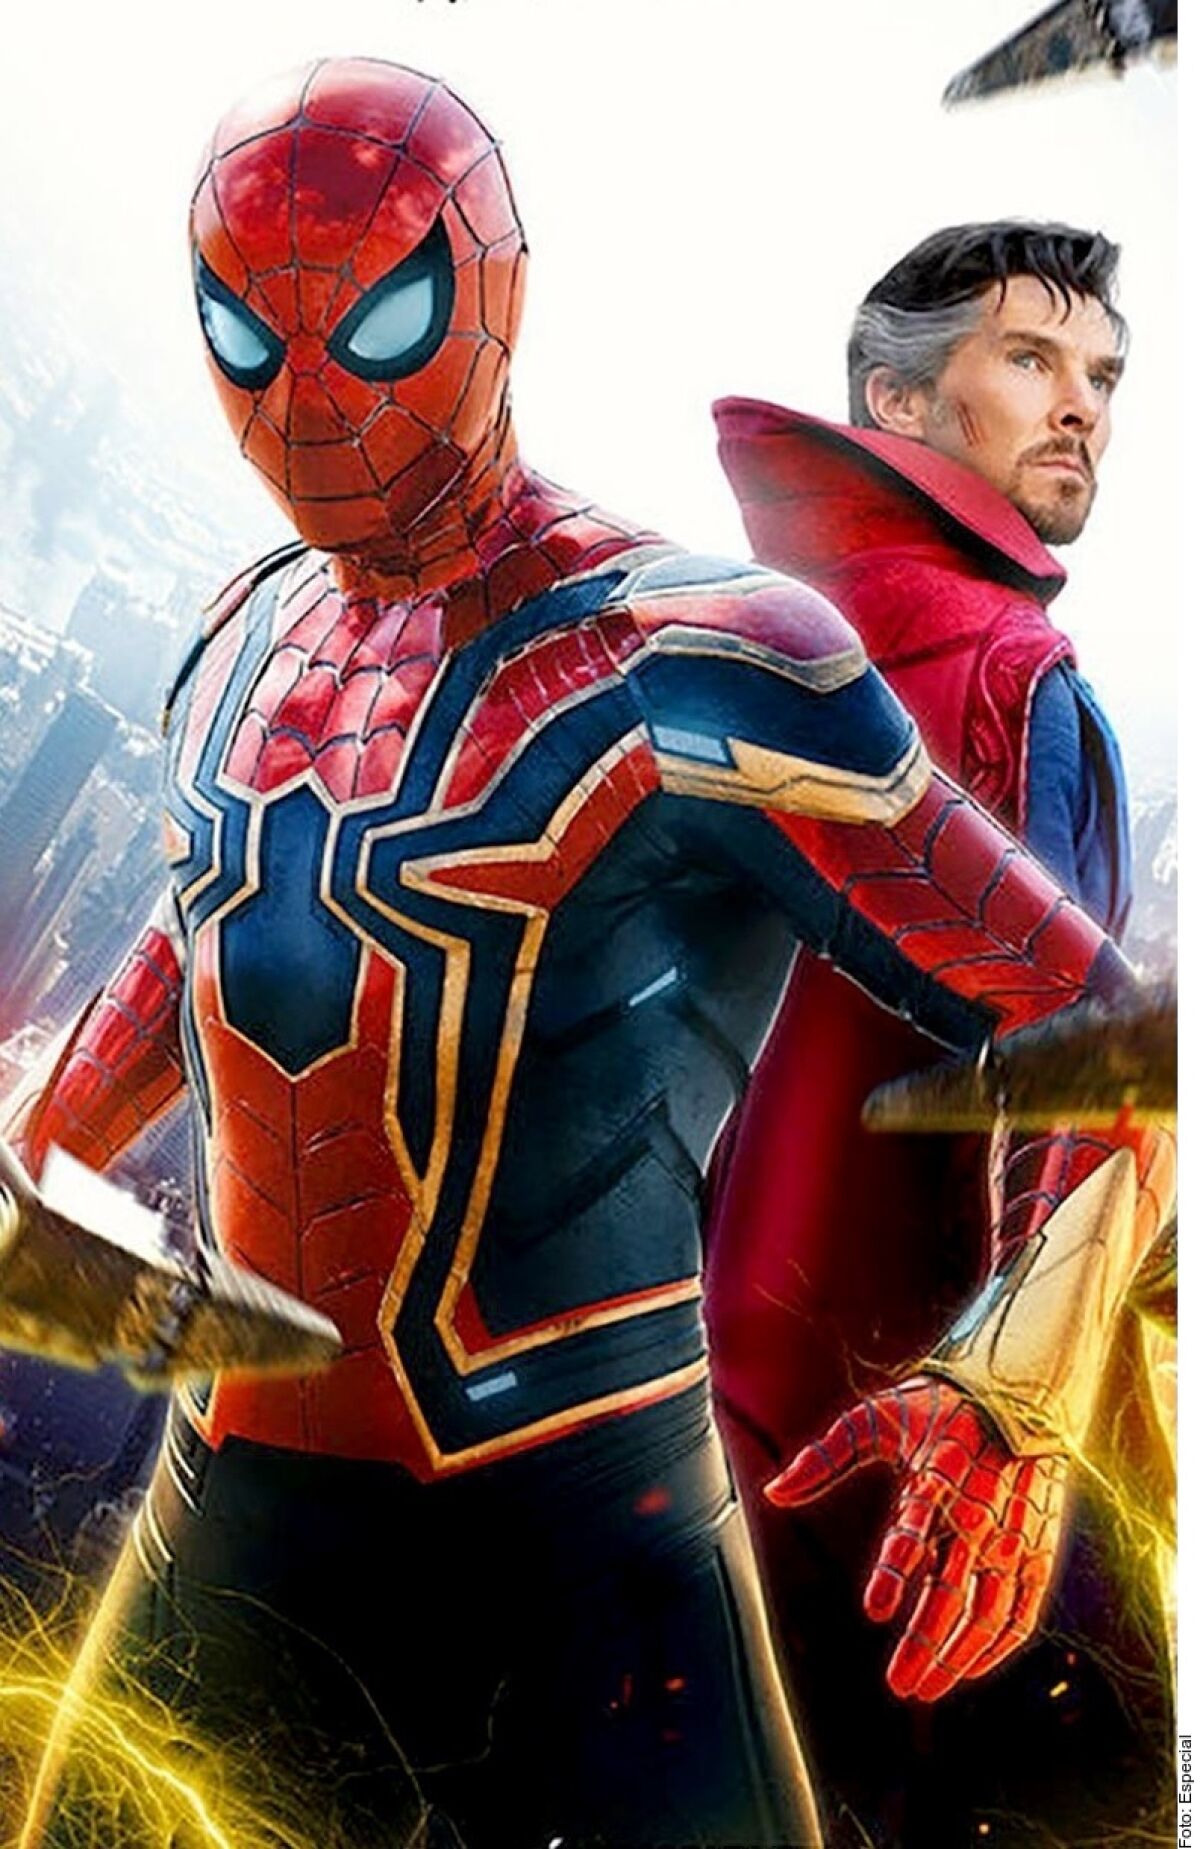 Spider-Man vence a los Avengers en la taquilla - Los Angeles Times